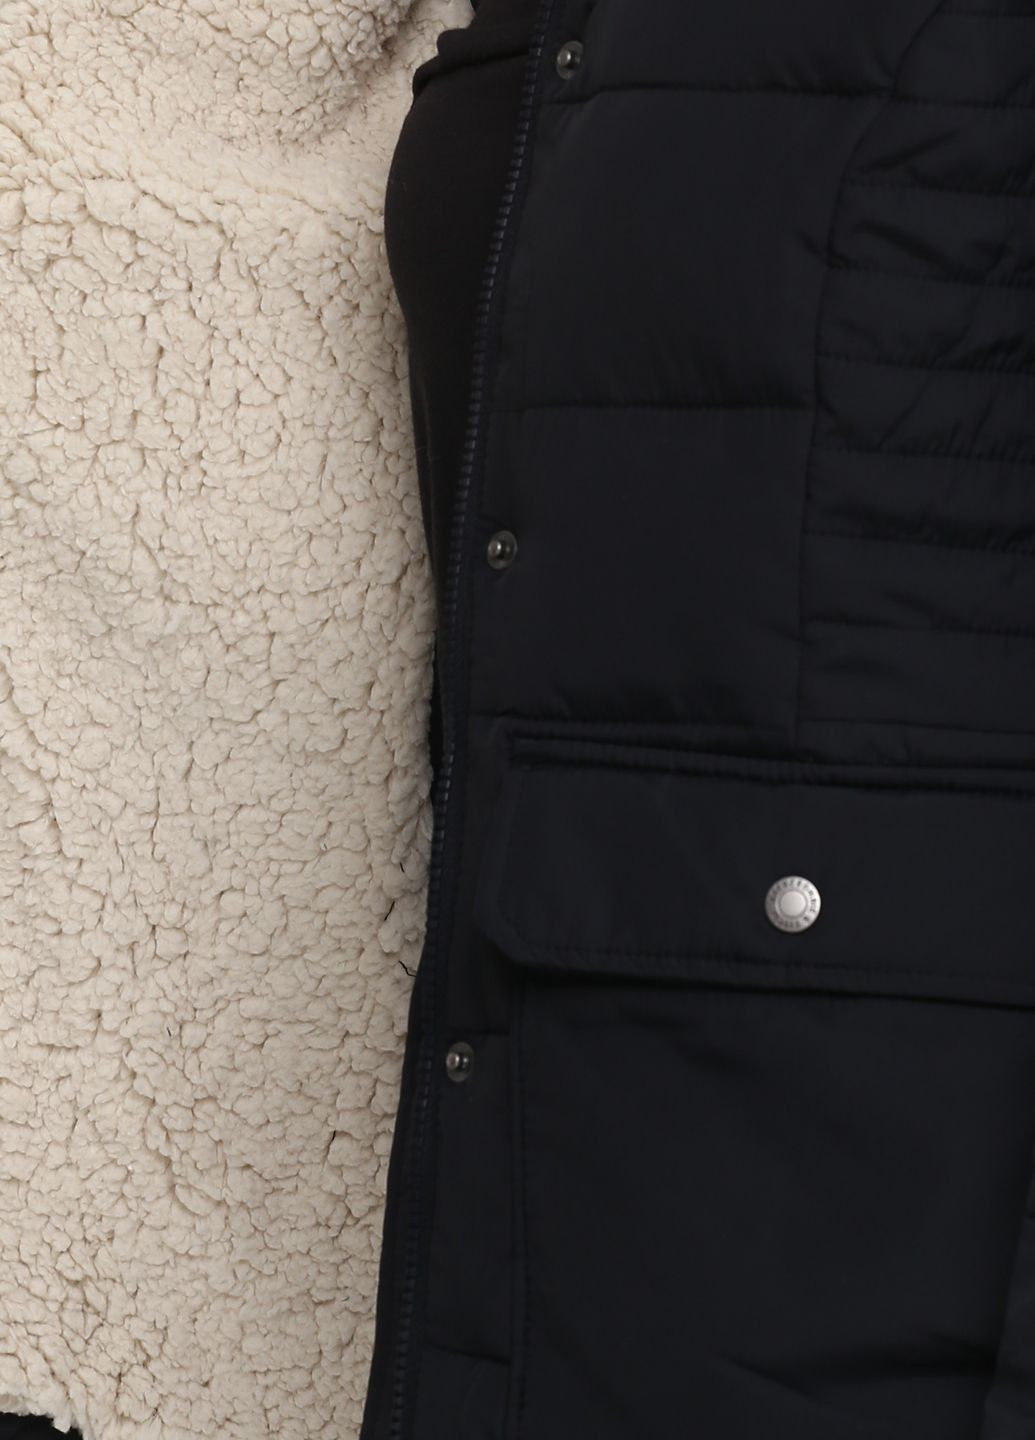 Черная демисезонная куртка демисезонная - женская куртка af5417w Abercrombie & Fitch